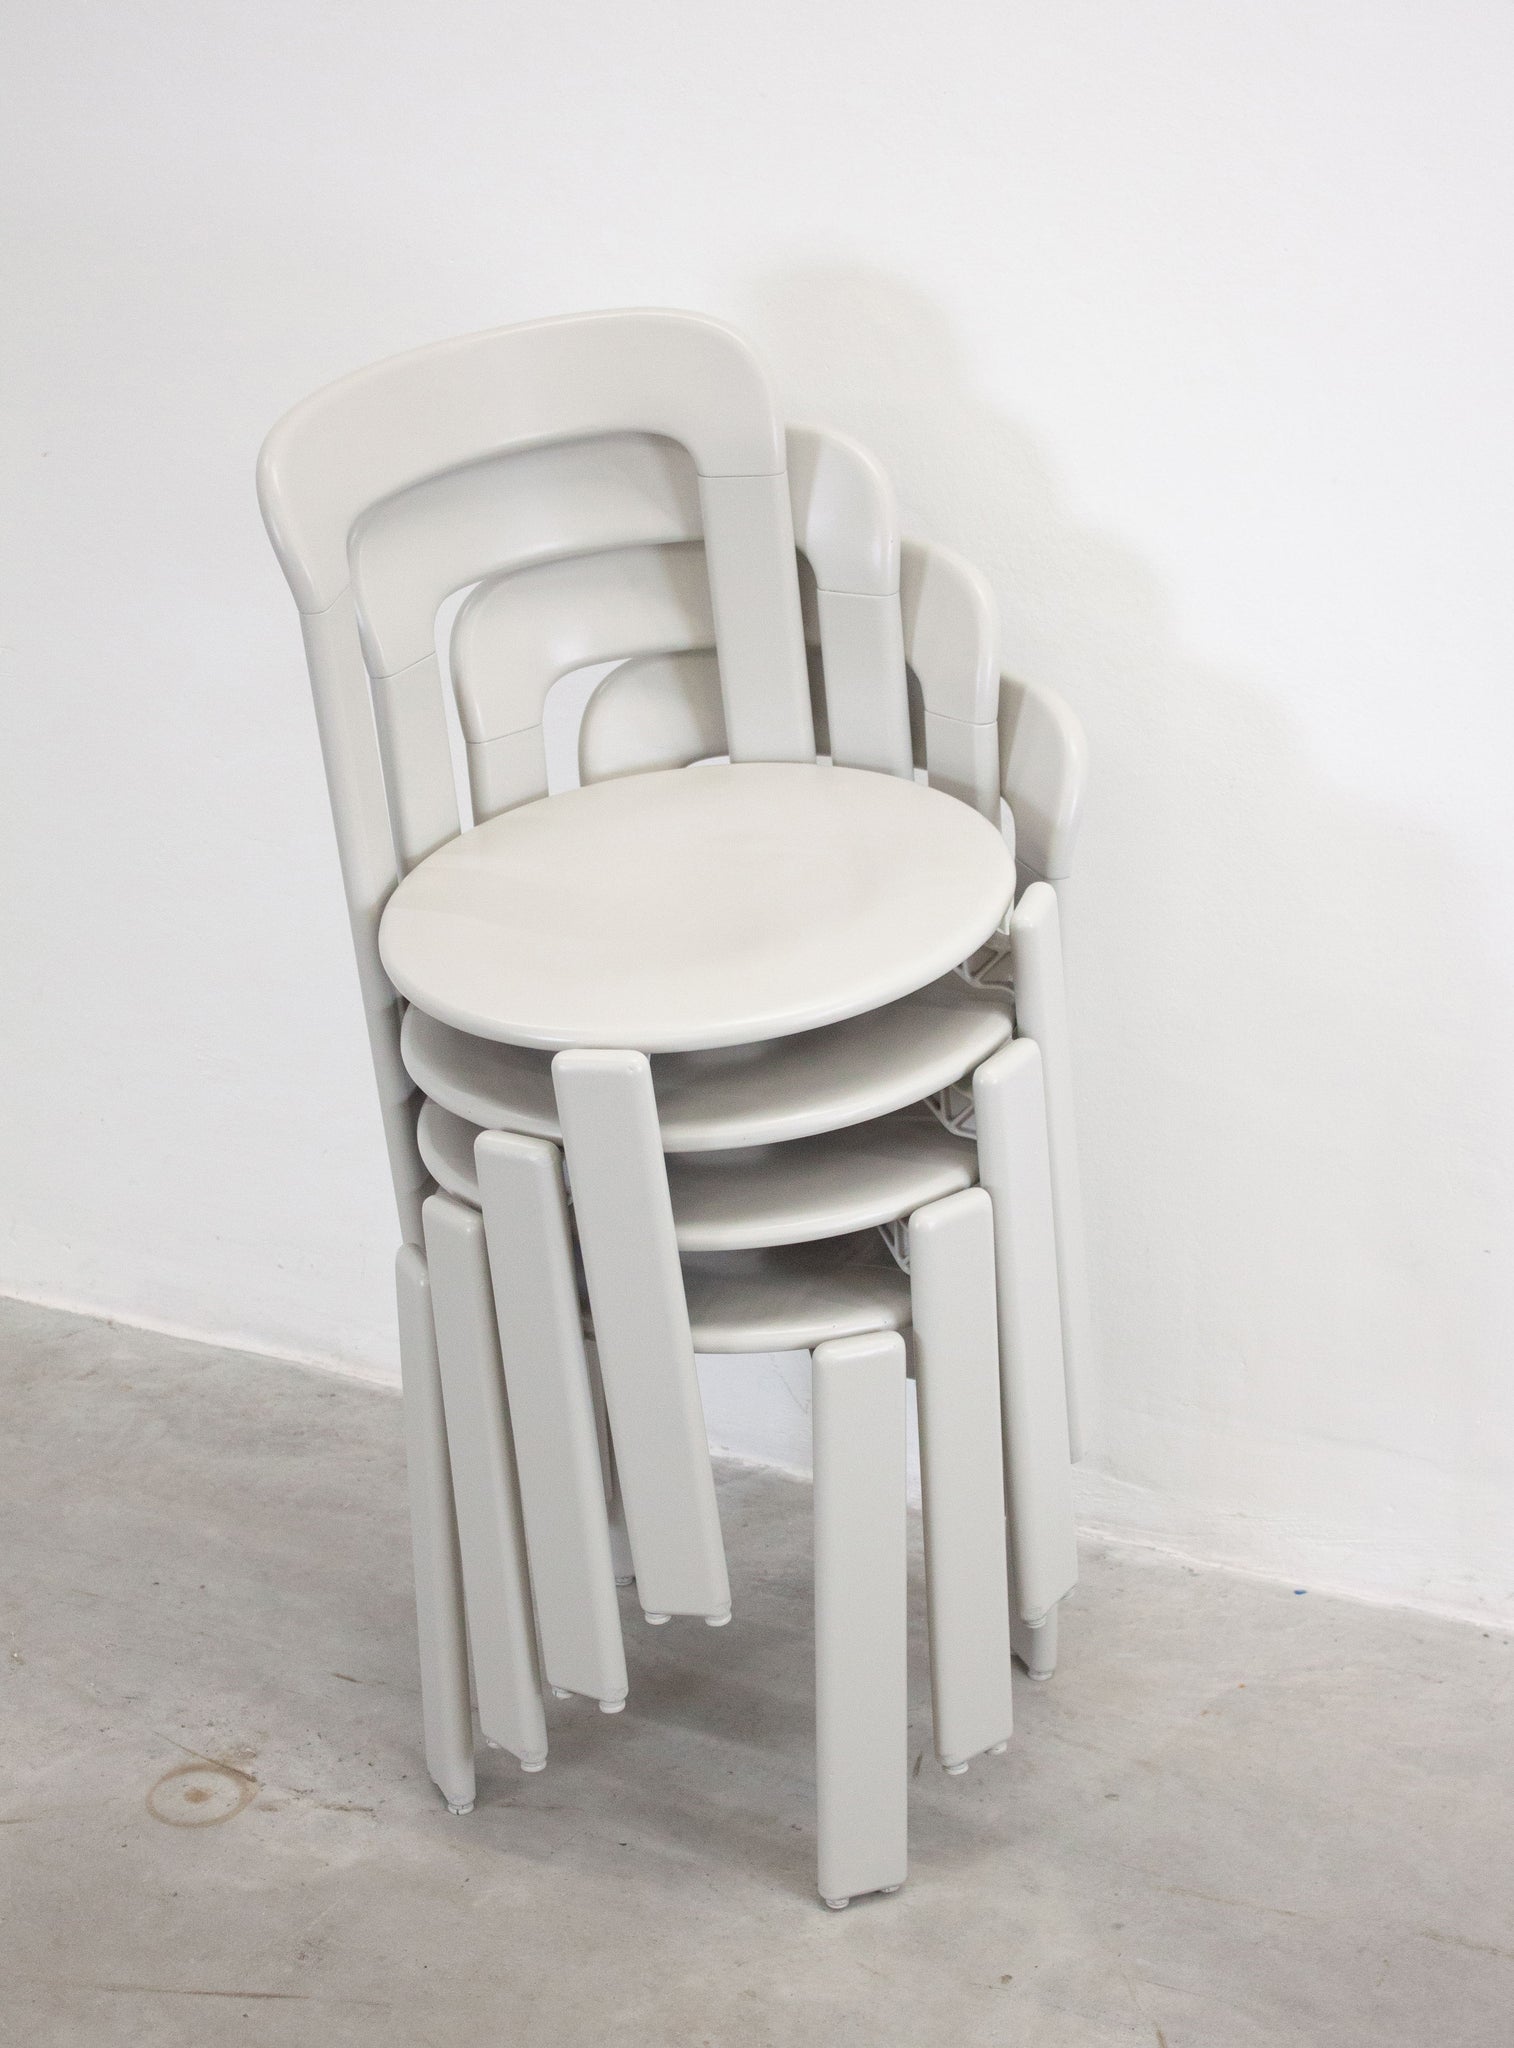 Dietiker Rey Dining Chairs by Bruno Rey (Ash)